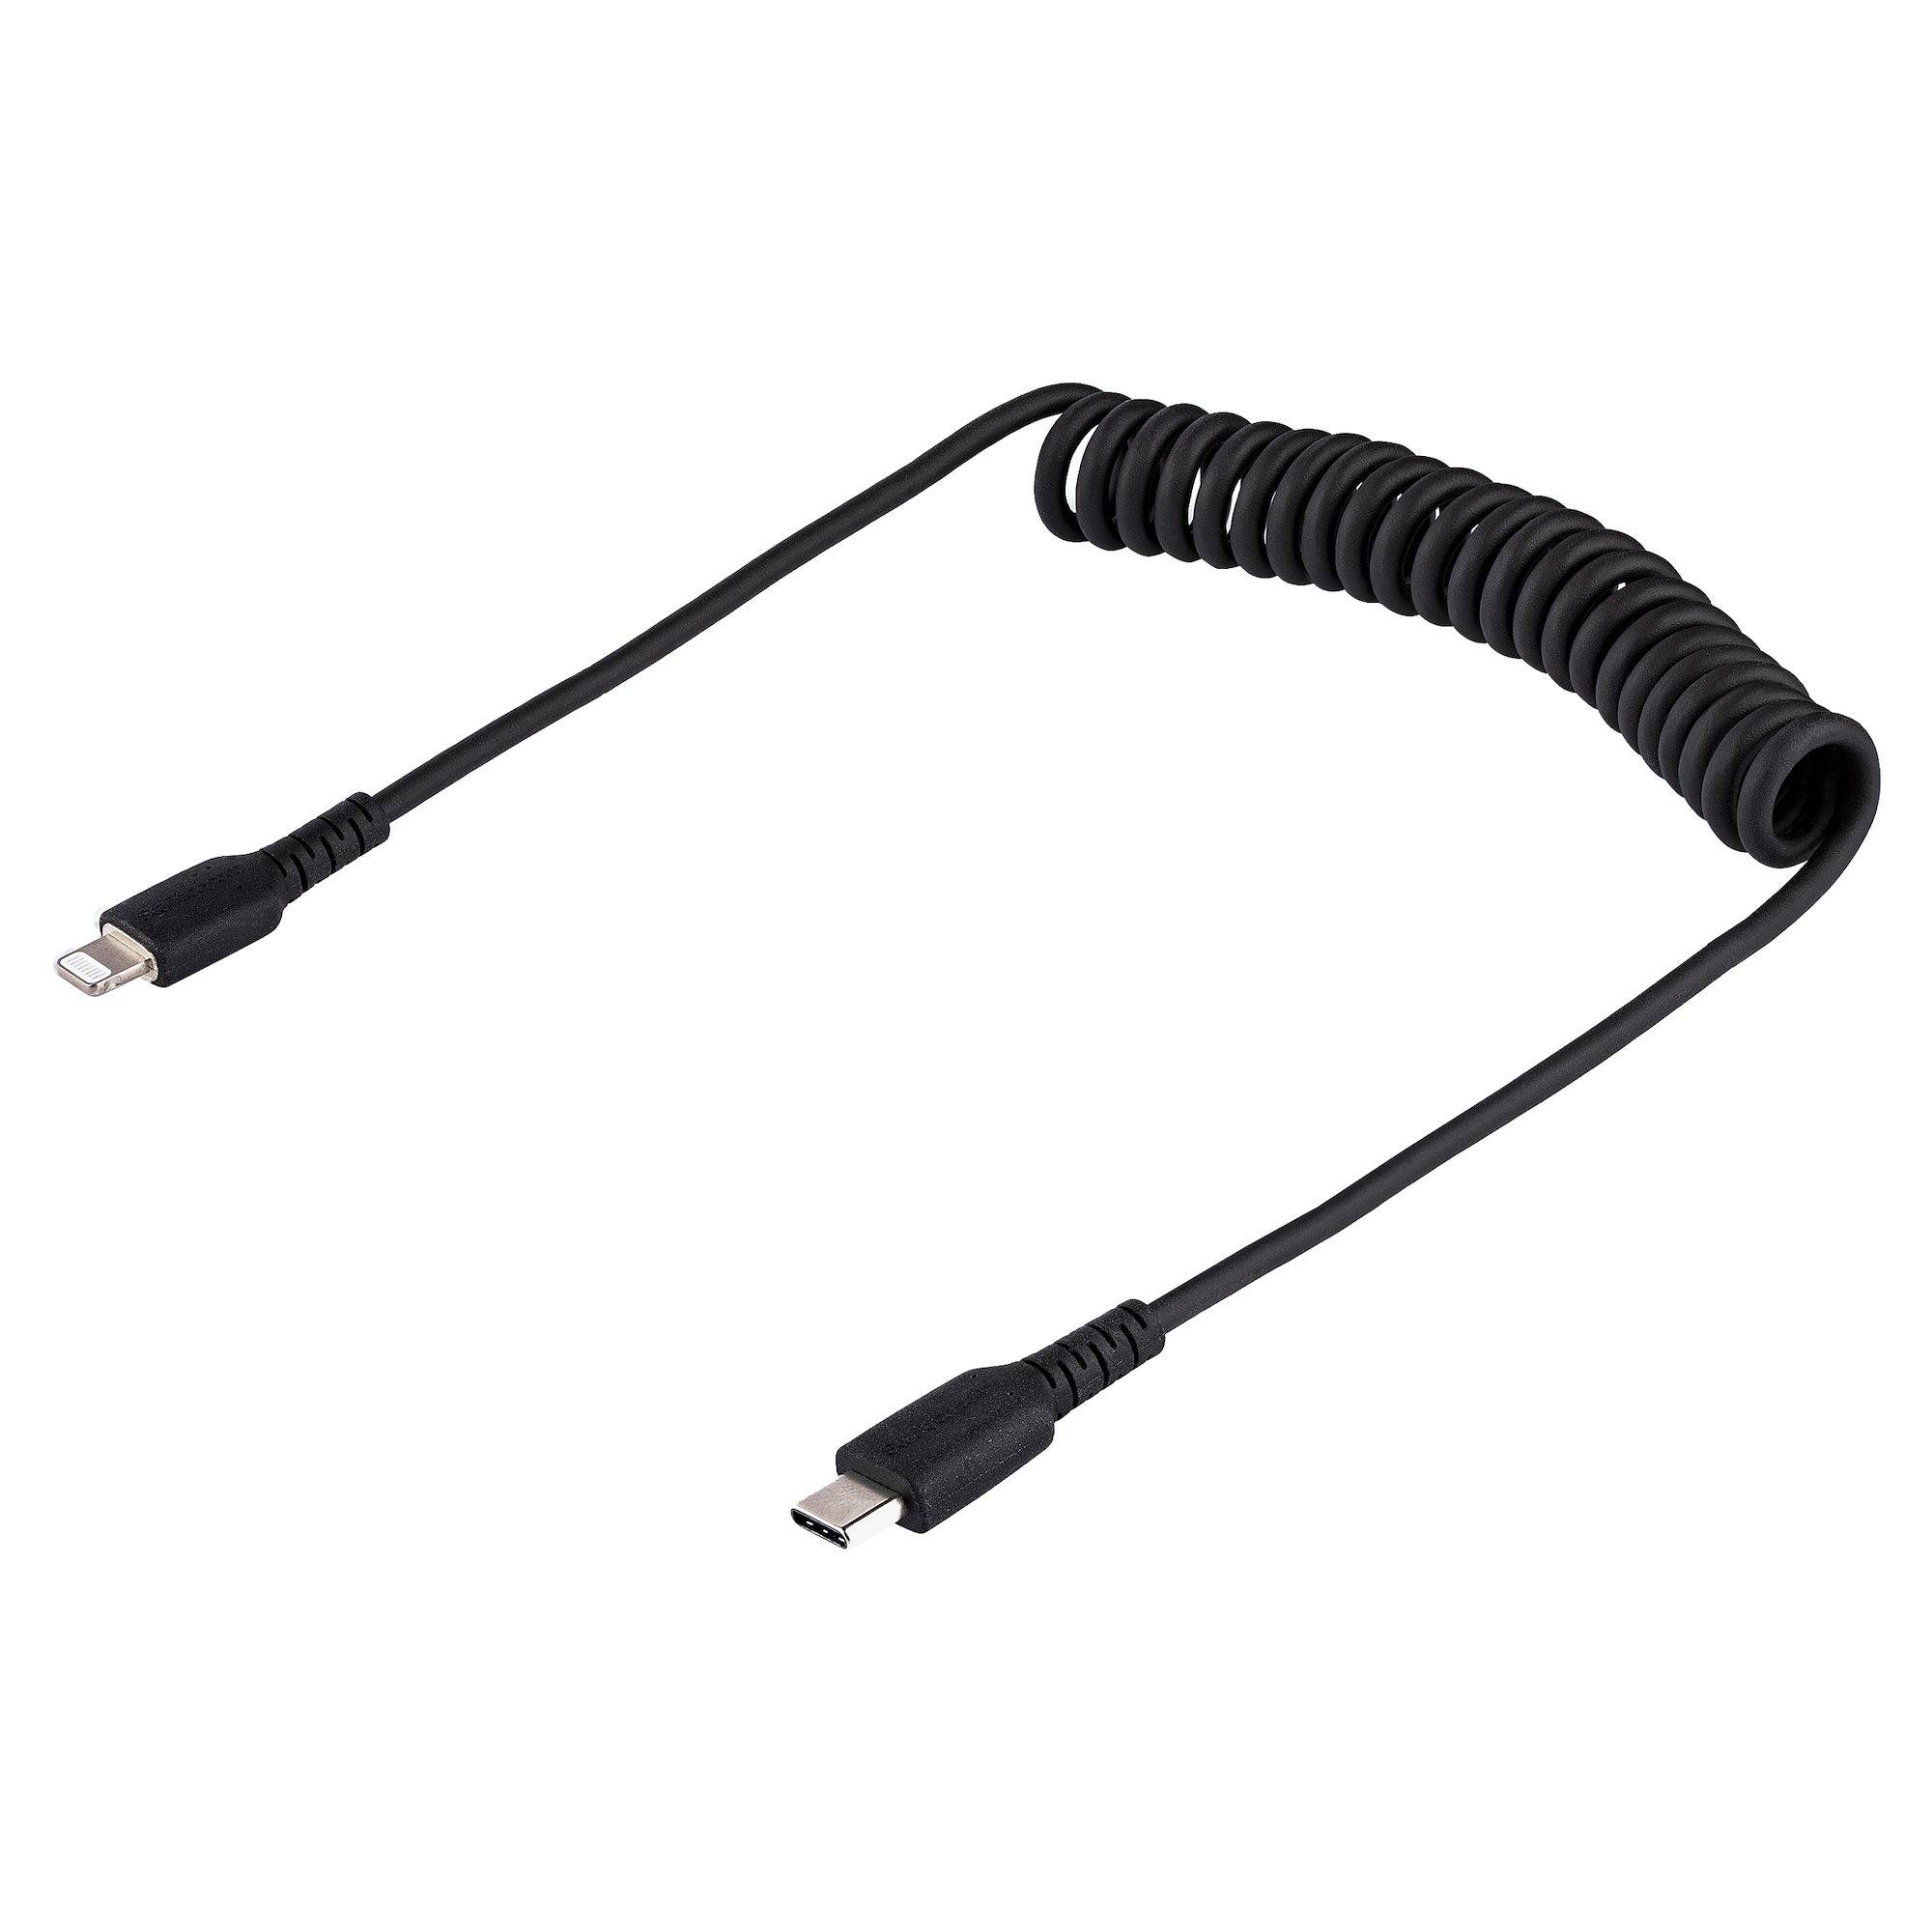 Rca Informatique - image du produit : USB C TO LIGHTNING CABLE - 50CM (20IN) COILED CABLE BLACK